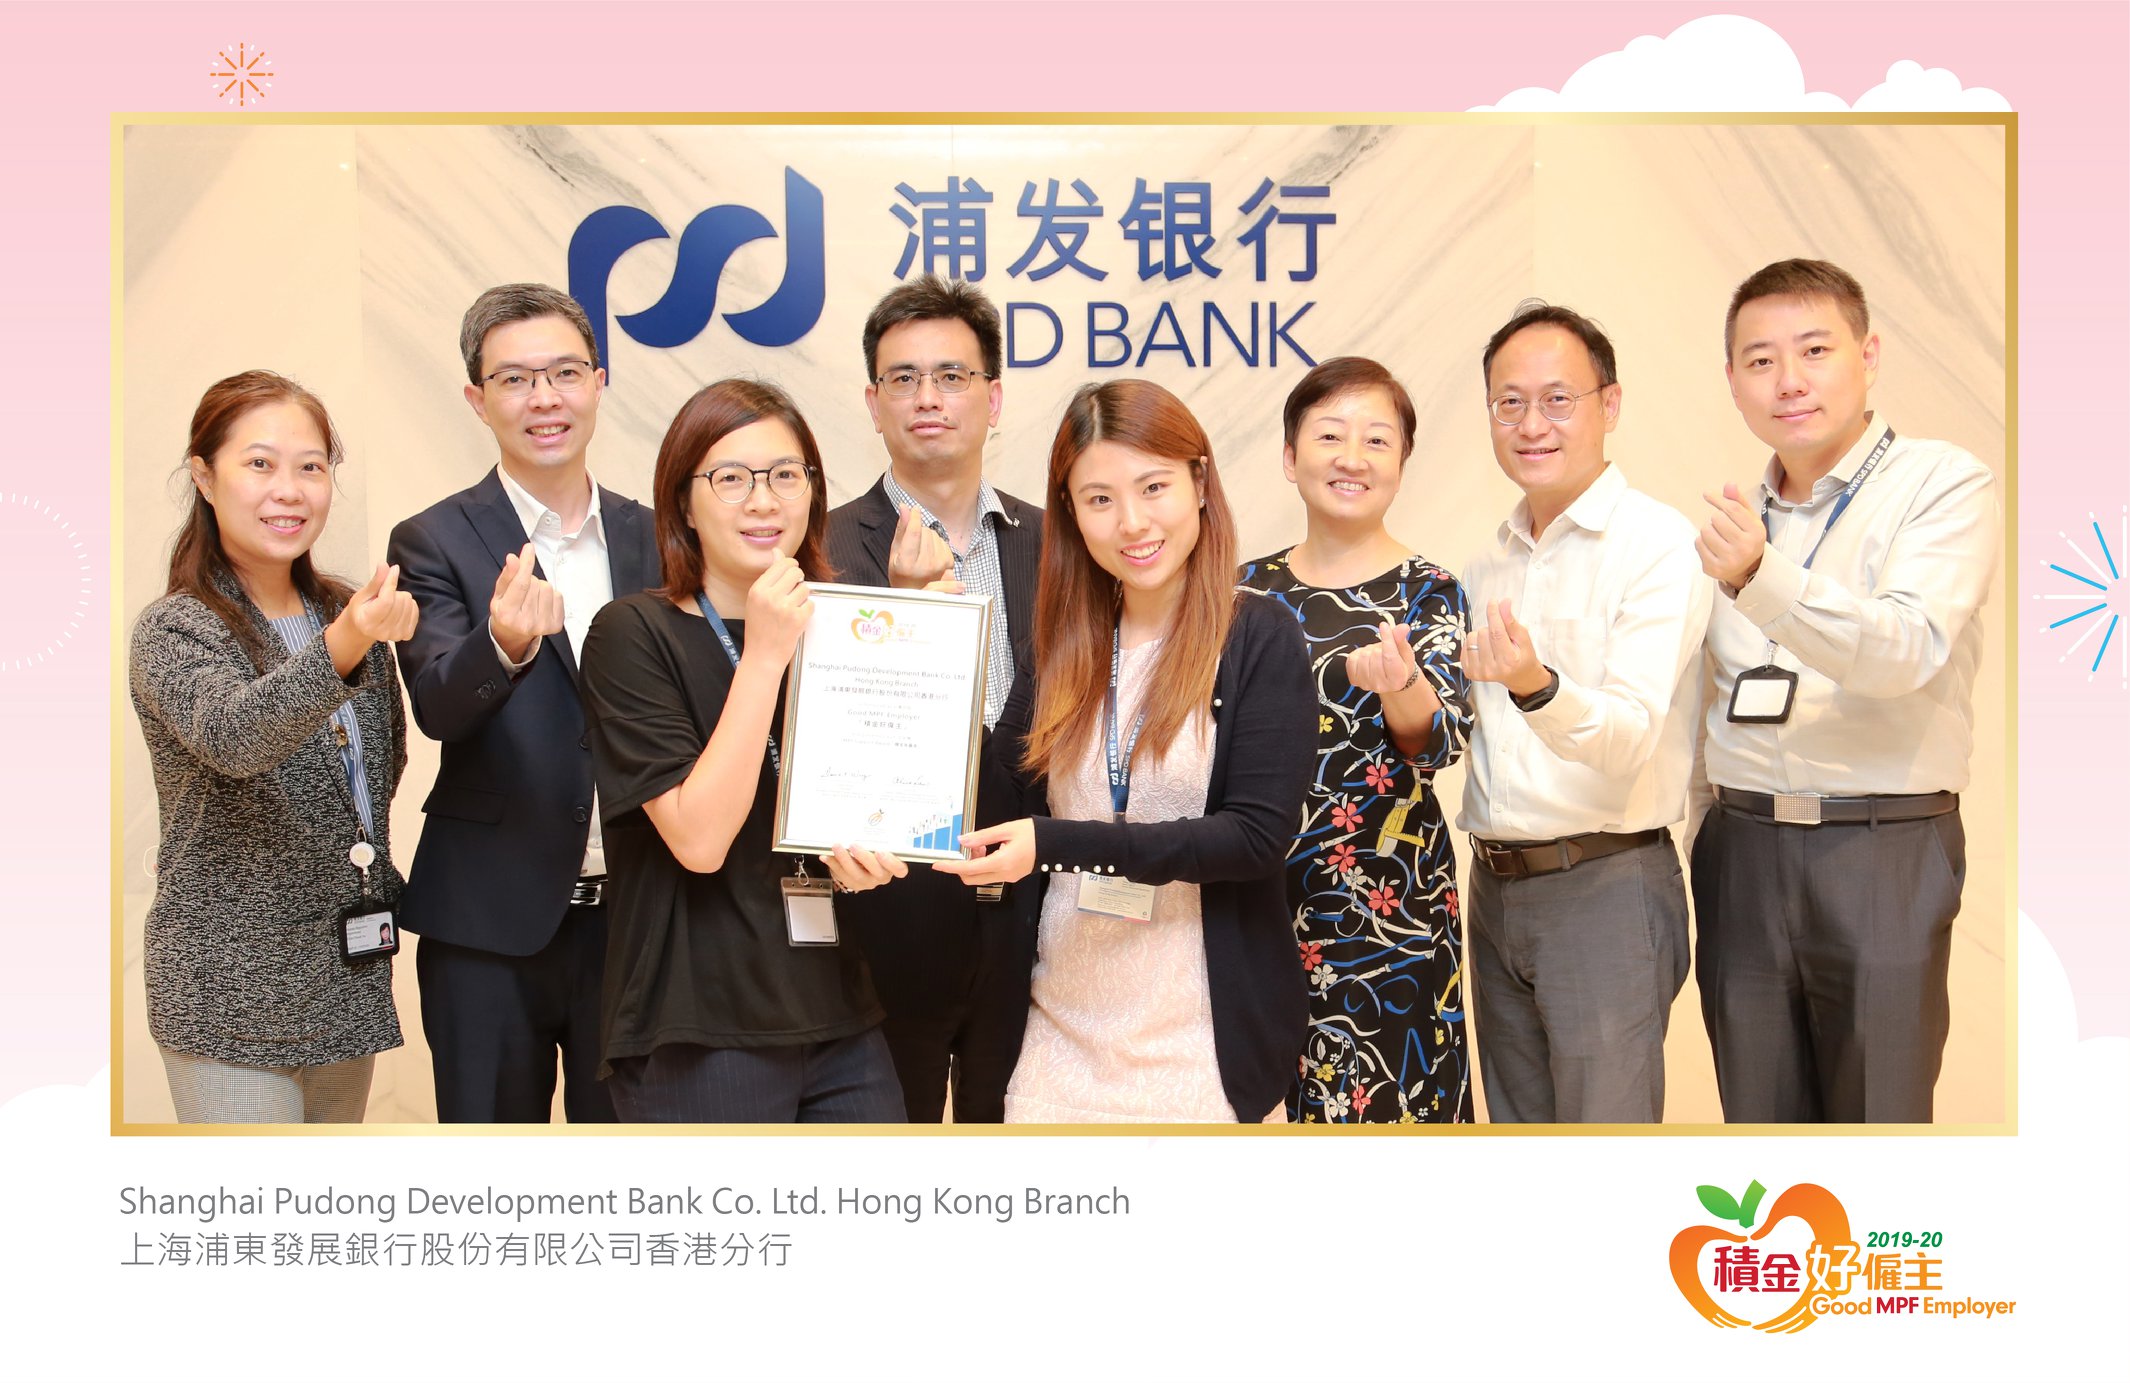 Shanghai Pudong Development Bank Co. Ltd. Hong Kong Branch 上海浦東發展銀行股份有限公司香港分行